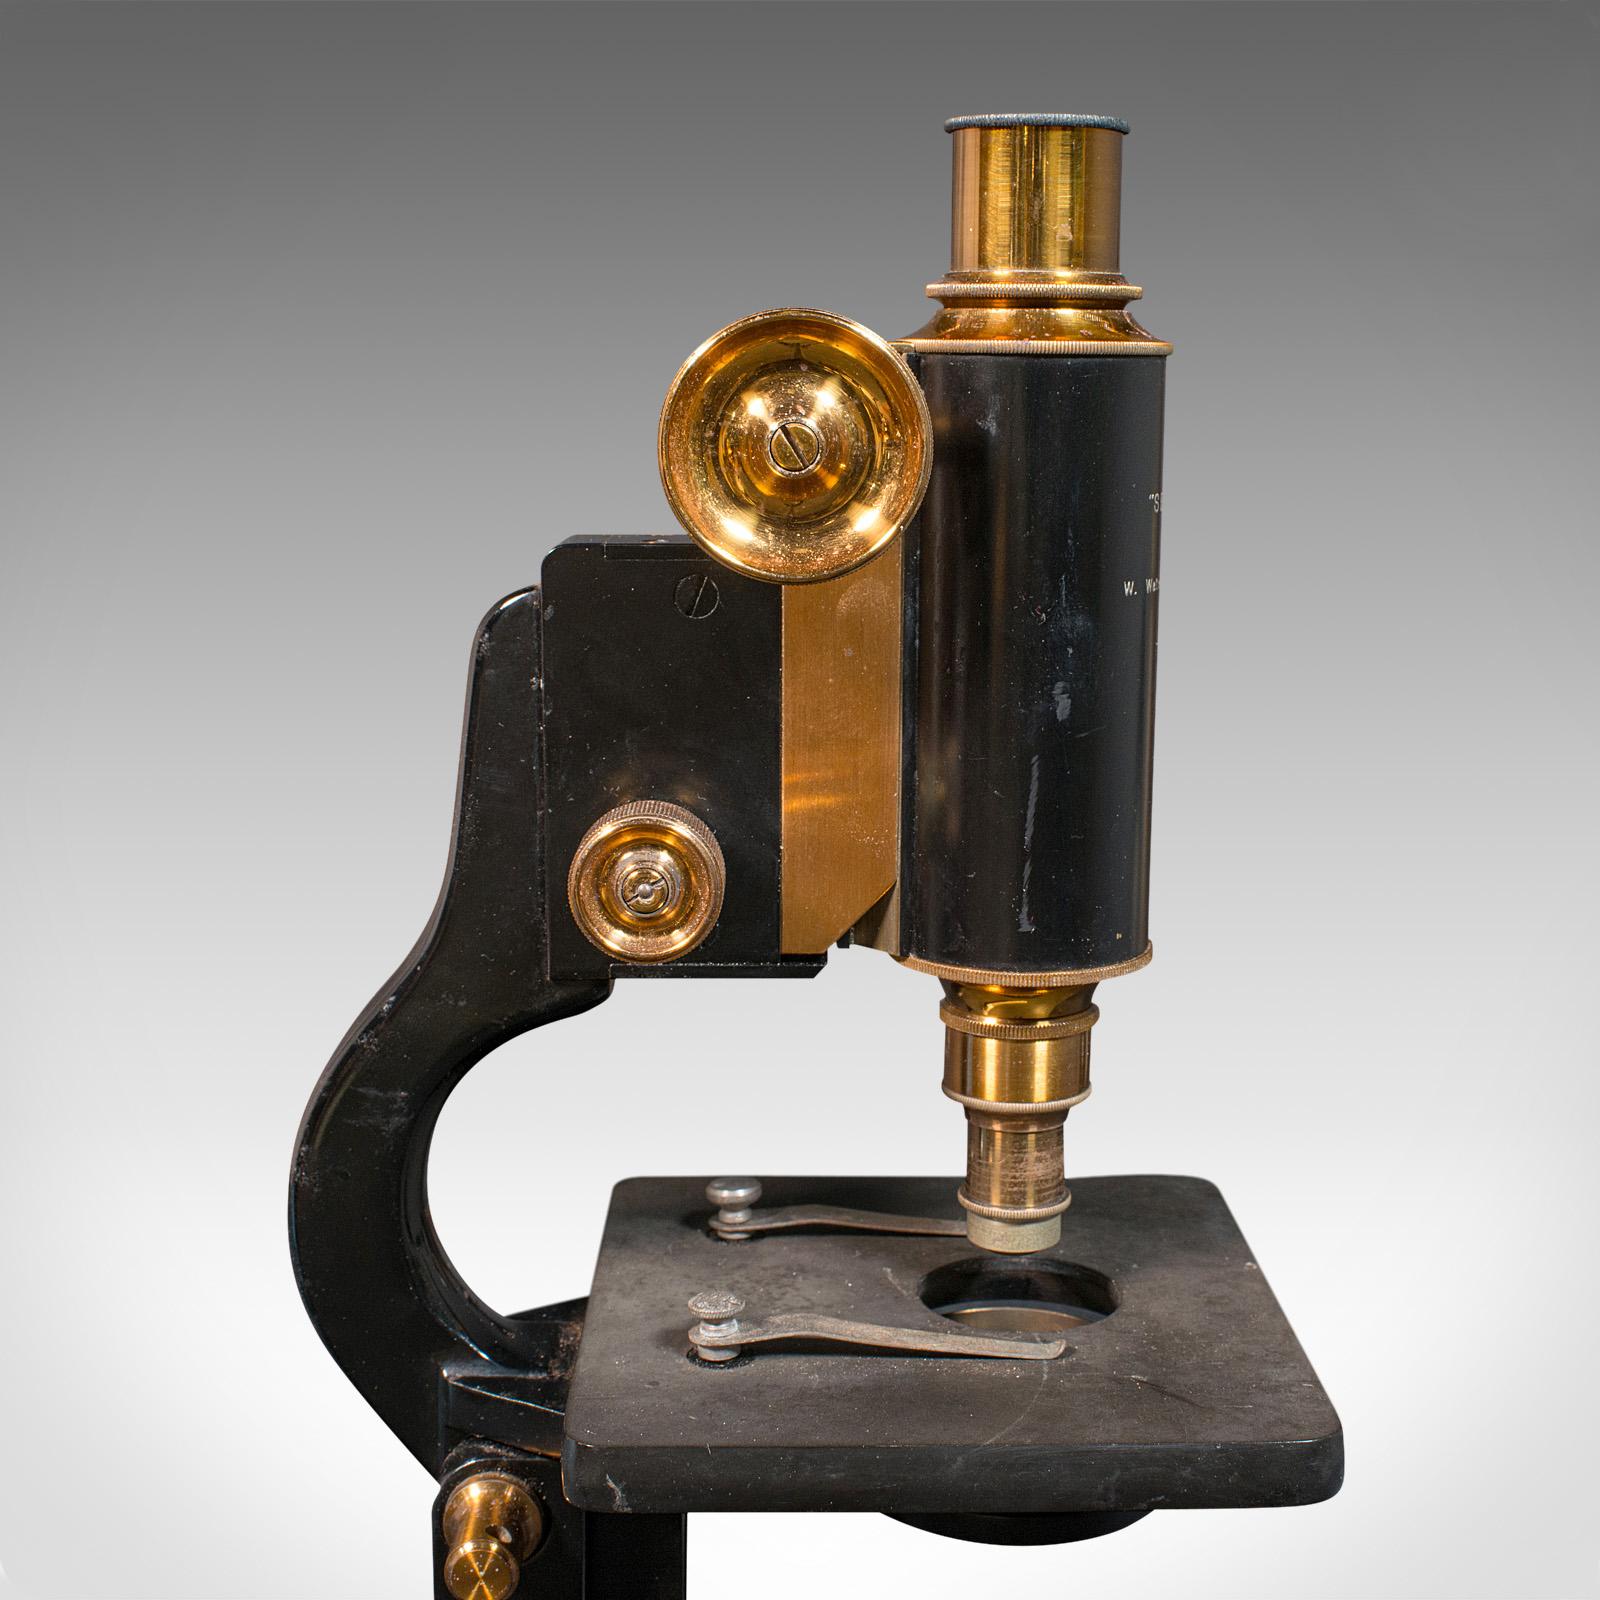 British Antique Cased Microscope, English, Scientific Instrument, Watson of London, 1920